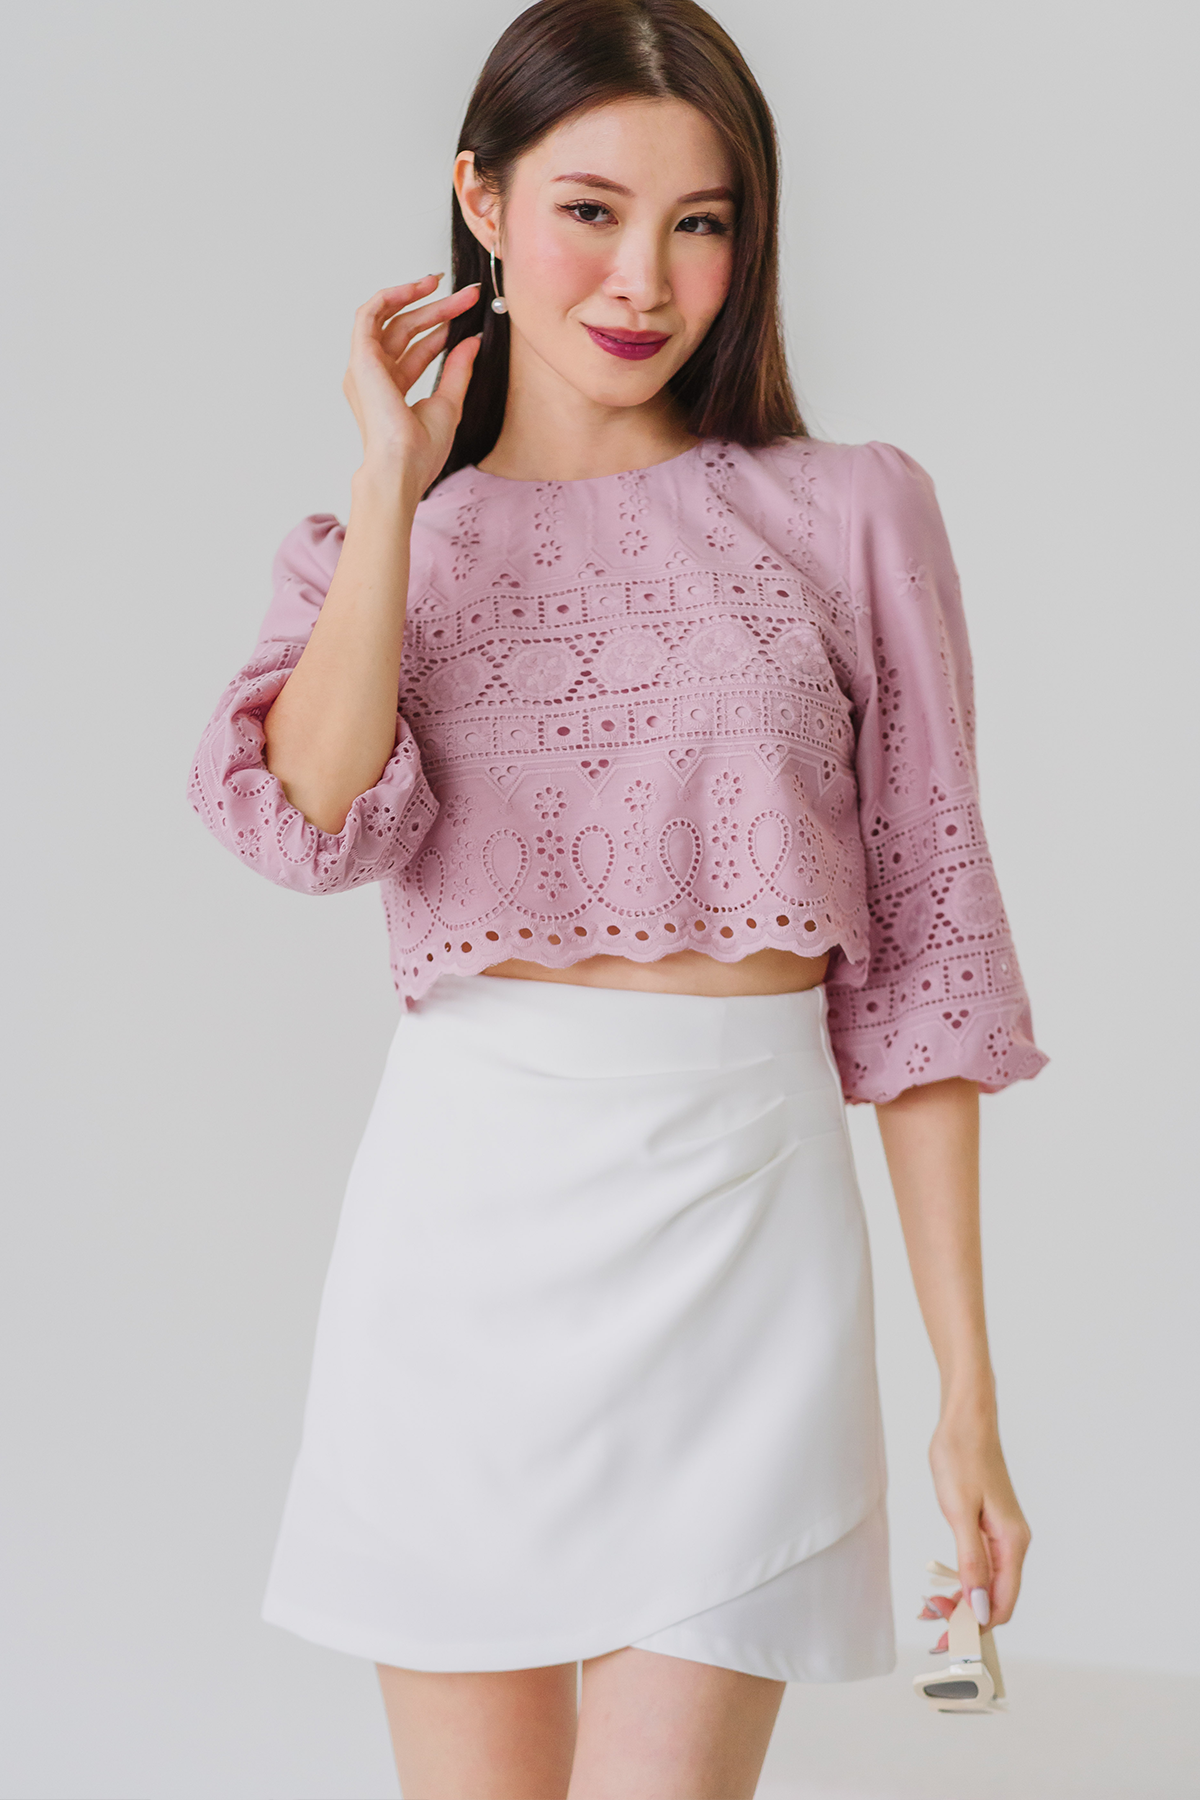 Sunday Morning Crochet Top (Pale Pink)